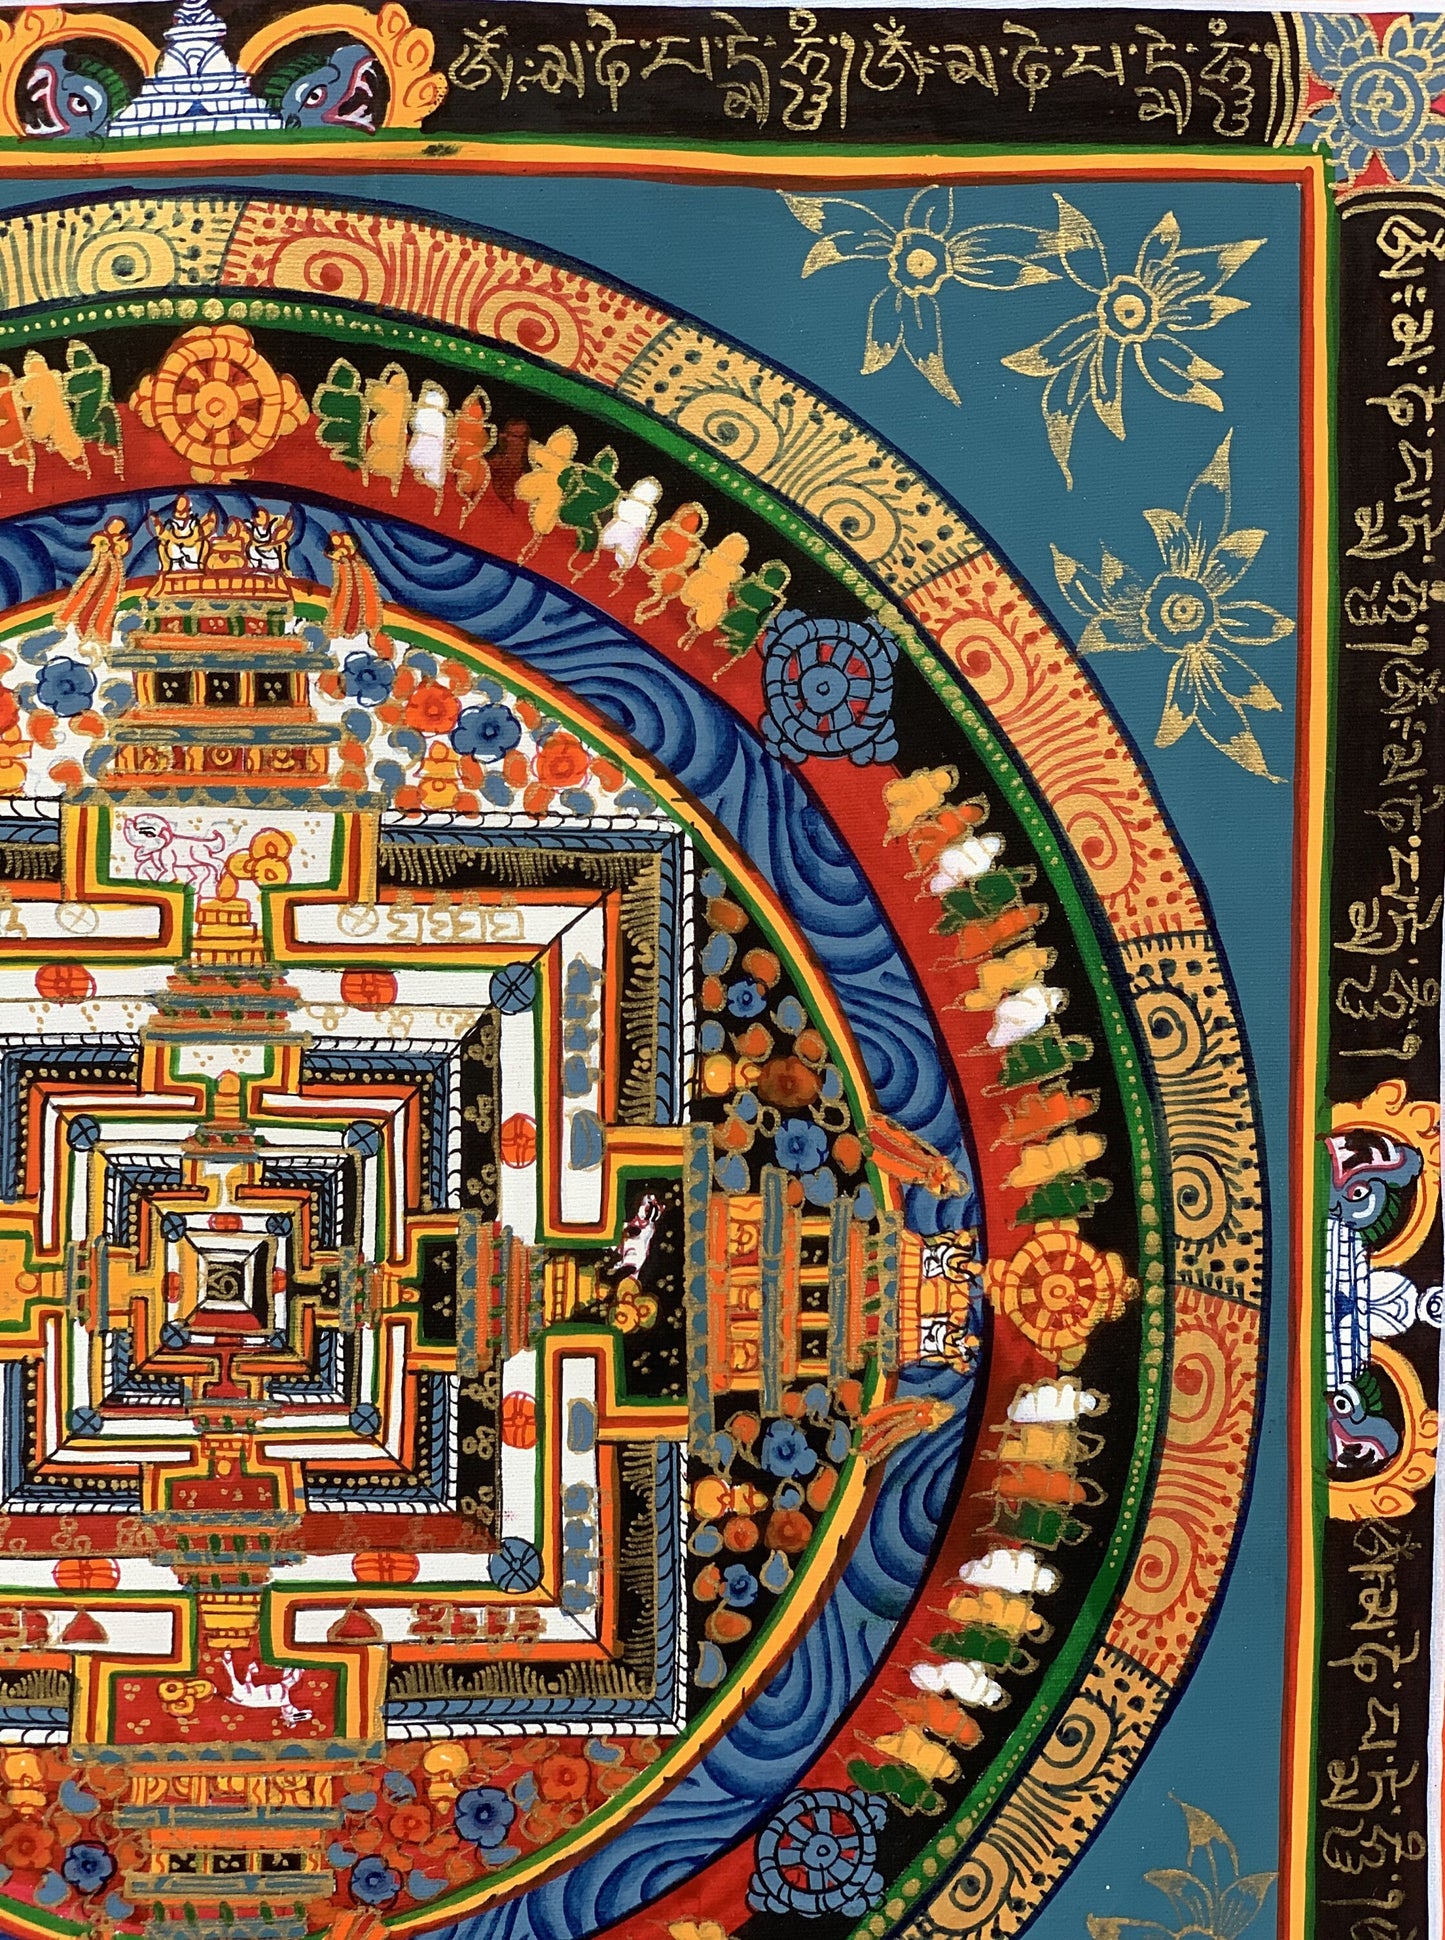 Wheel of Life/ Wheel of Time, Kalachakra Mantra Mandala Original Hand Painted Tibetan Thangka/Thanka Painting  Wall Hanging  Meditation Art